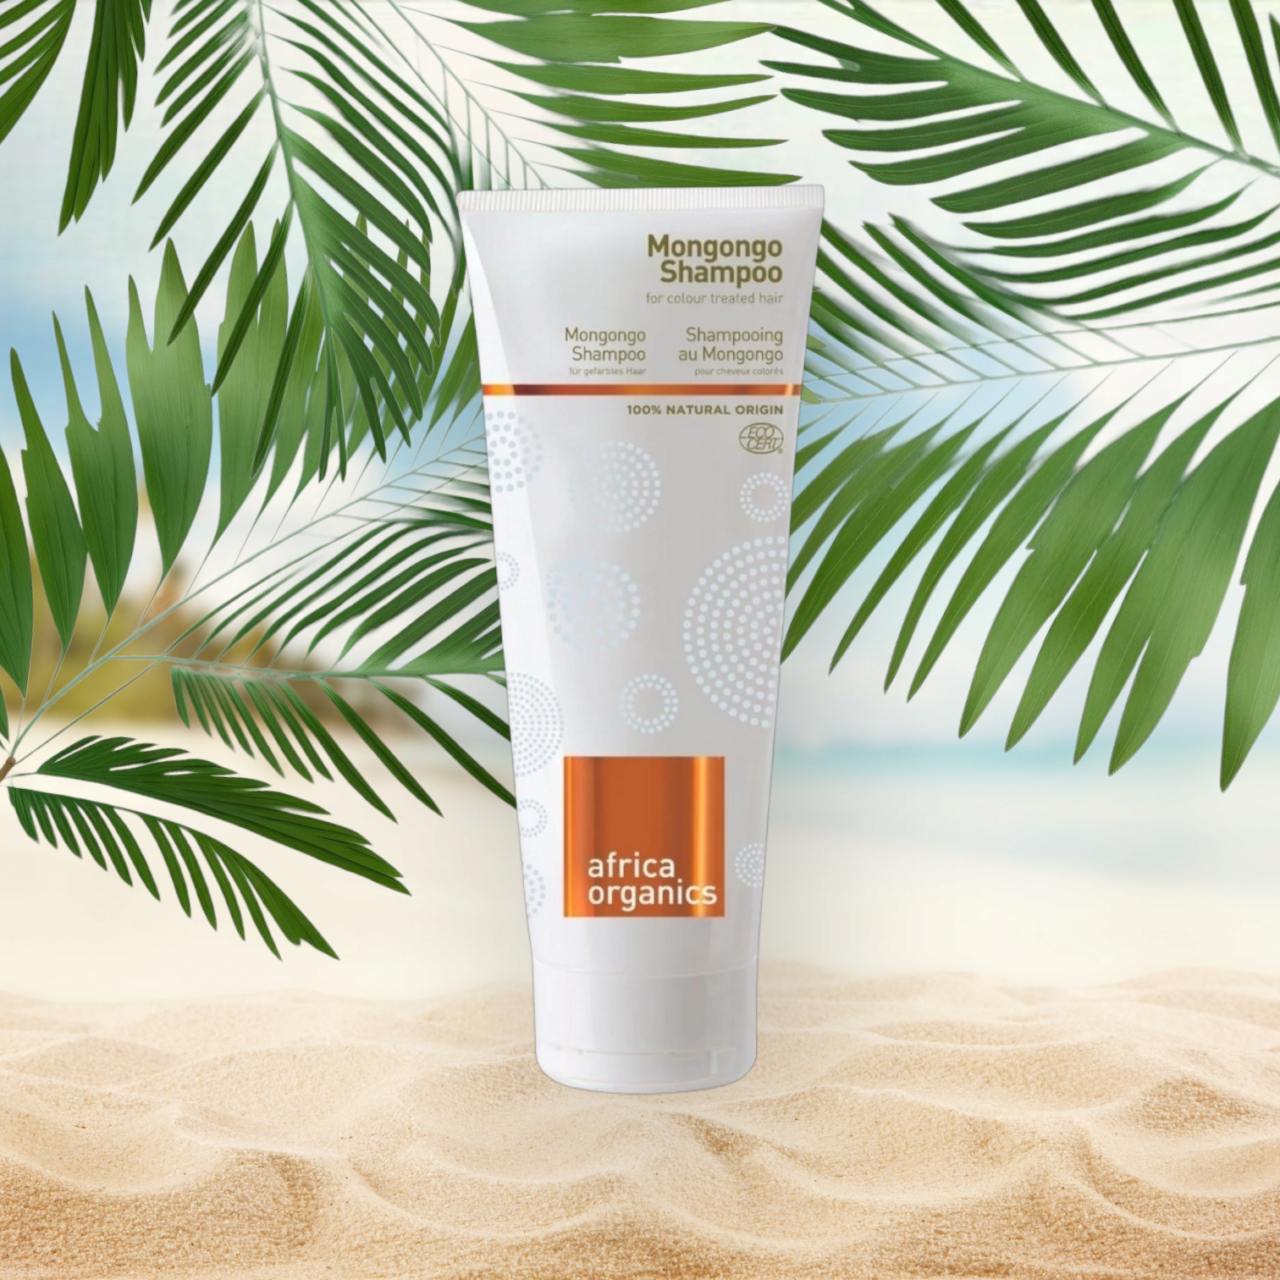 En tube Africa Organics Mongongo Shampoo 210ml på en strand med palmeblade.